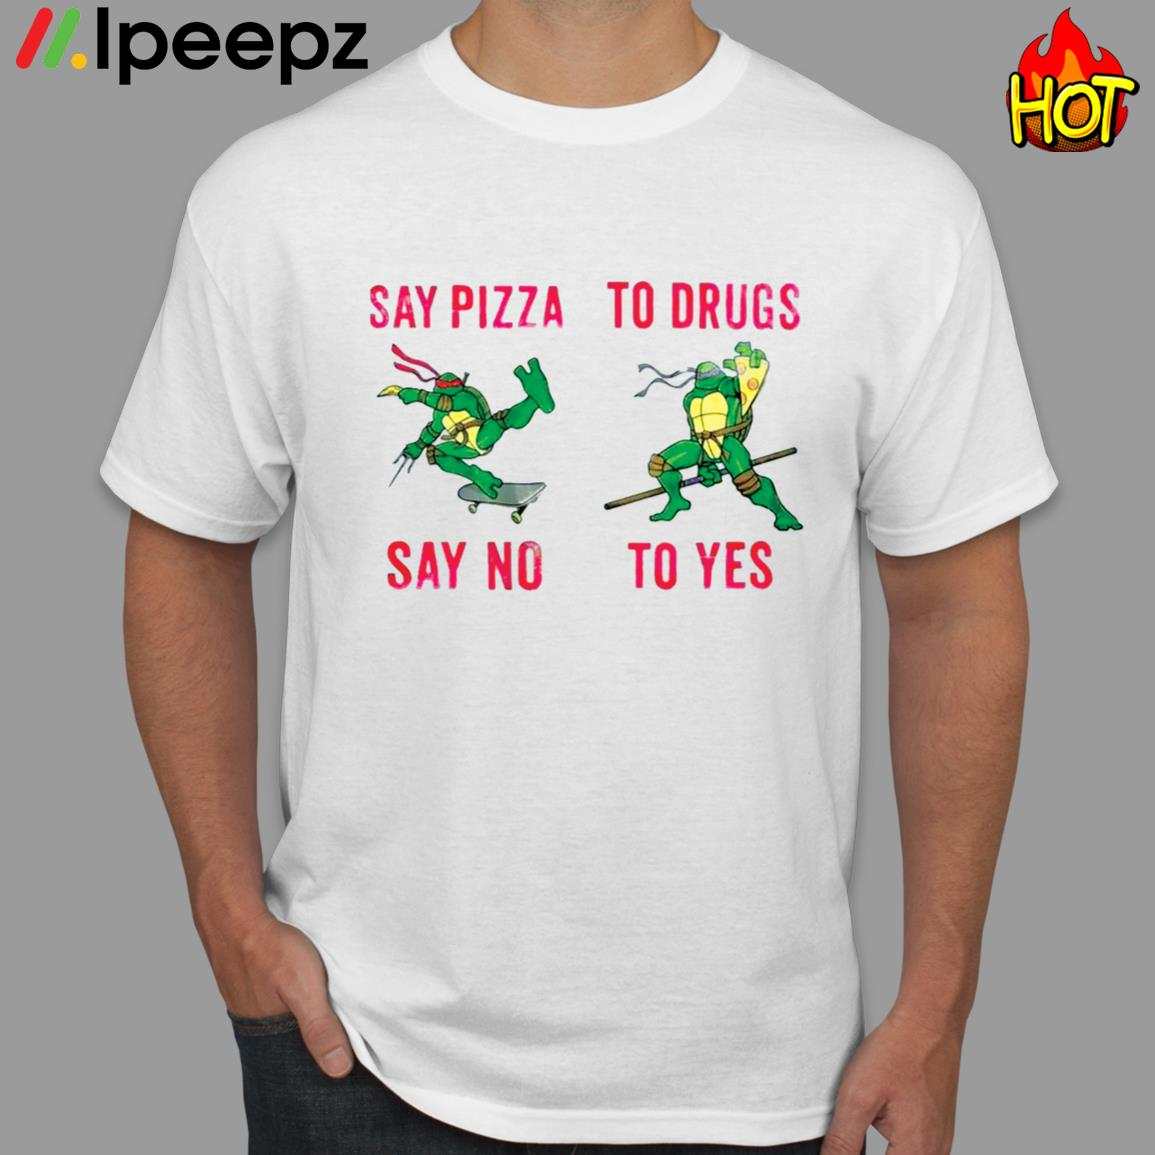 Turtle Raglan T-Shirt, Tops & T-Shirts